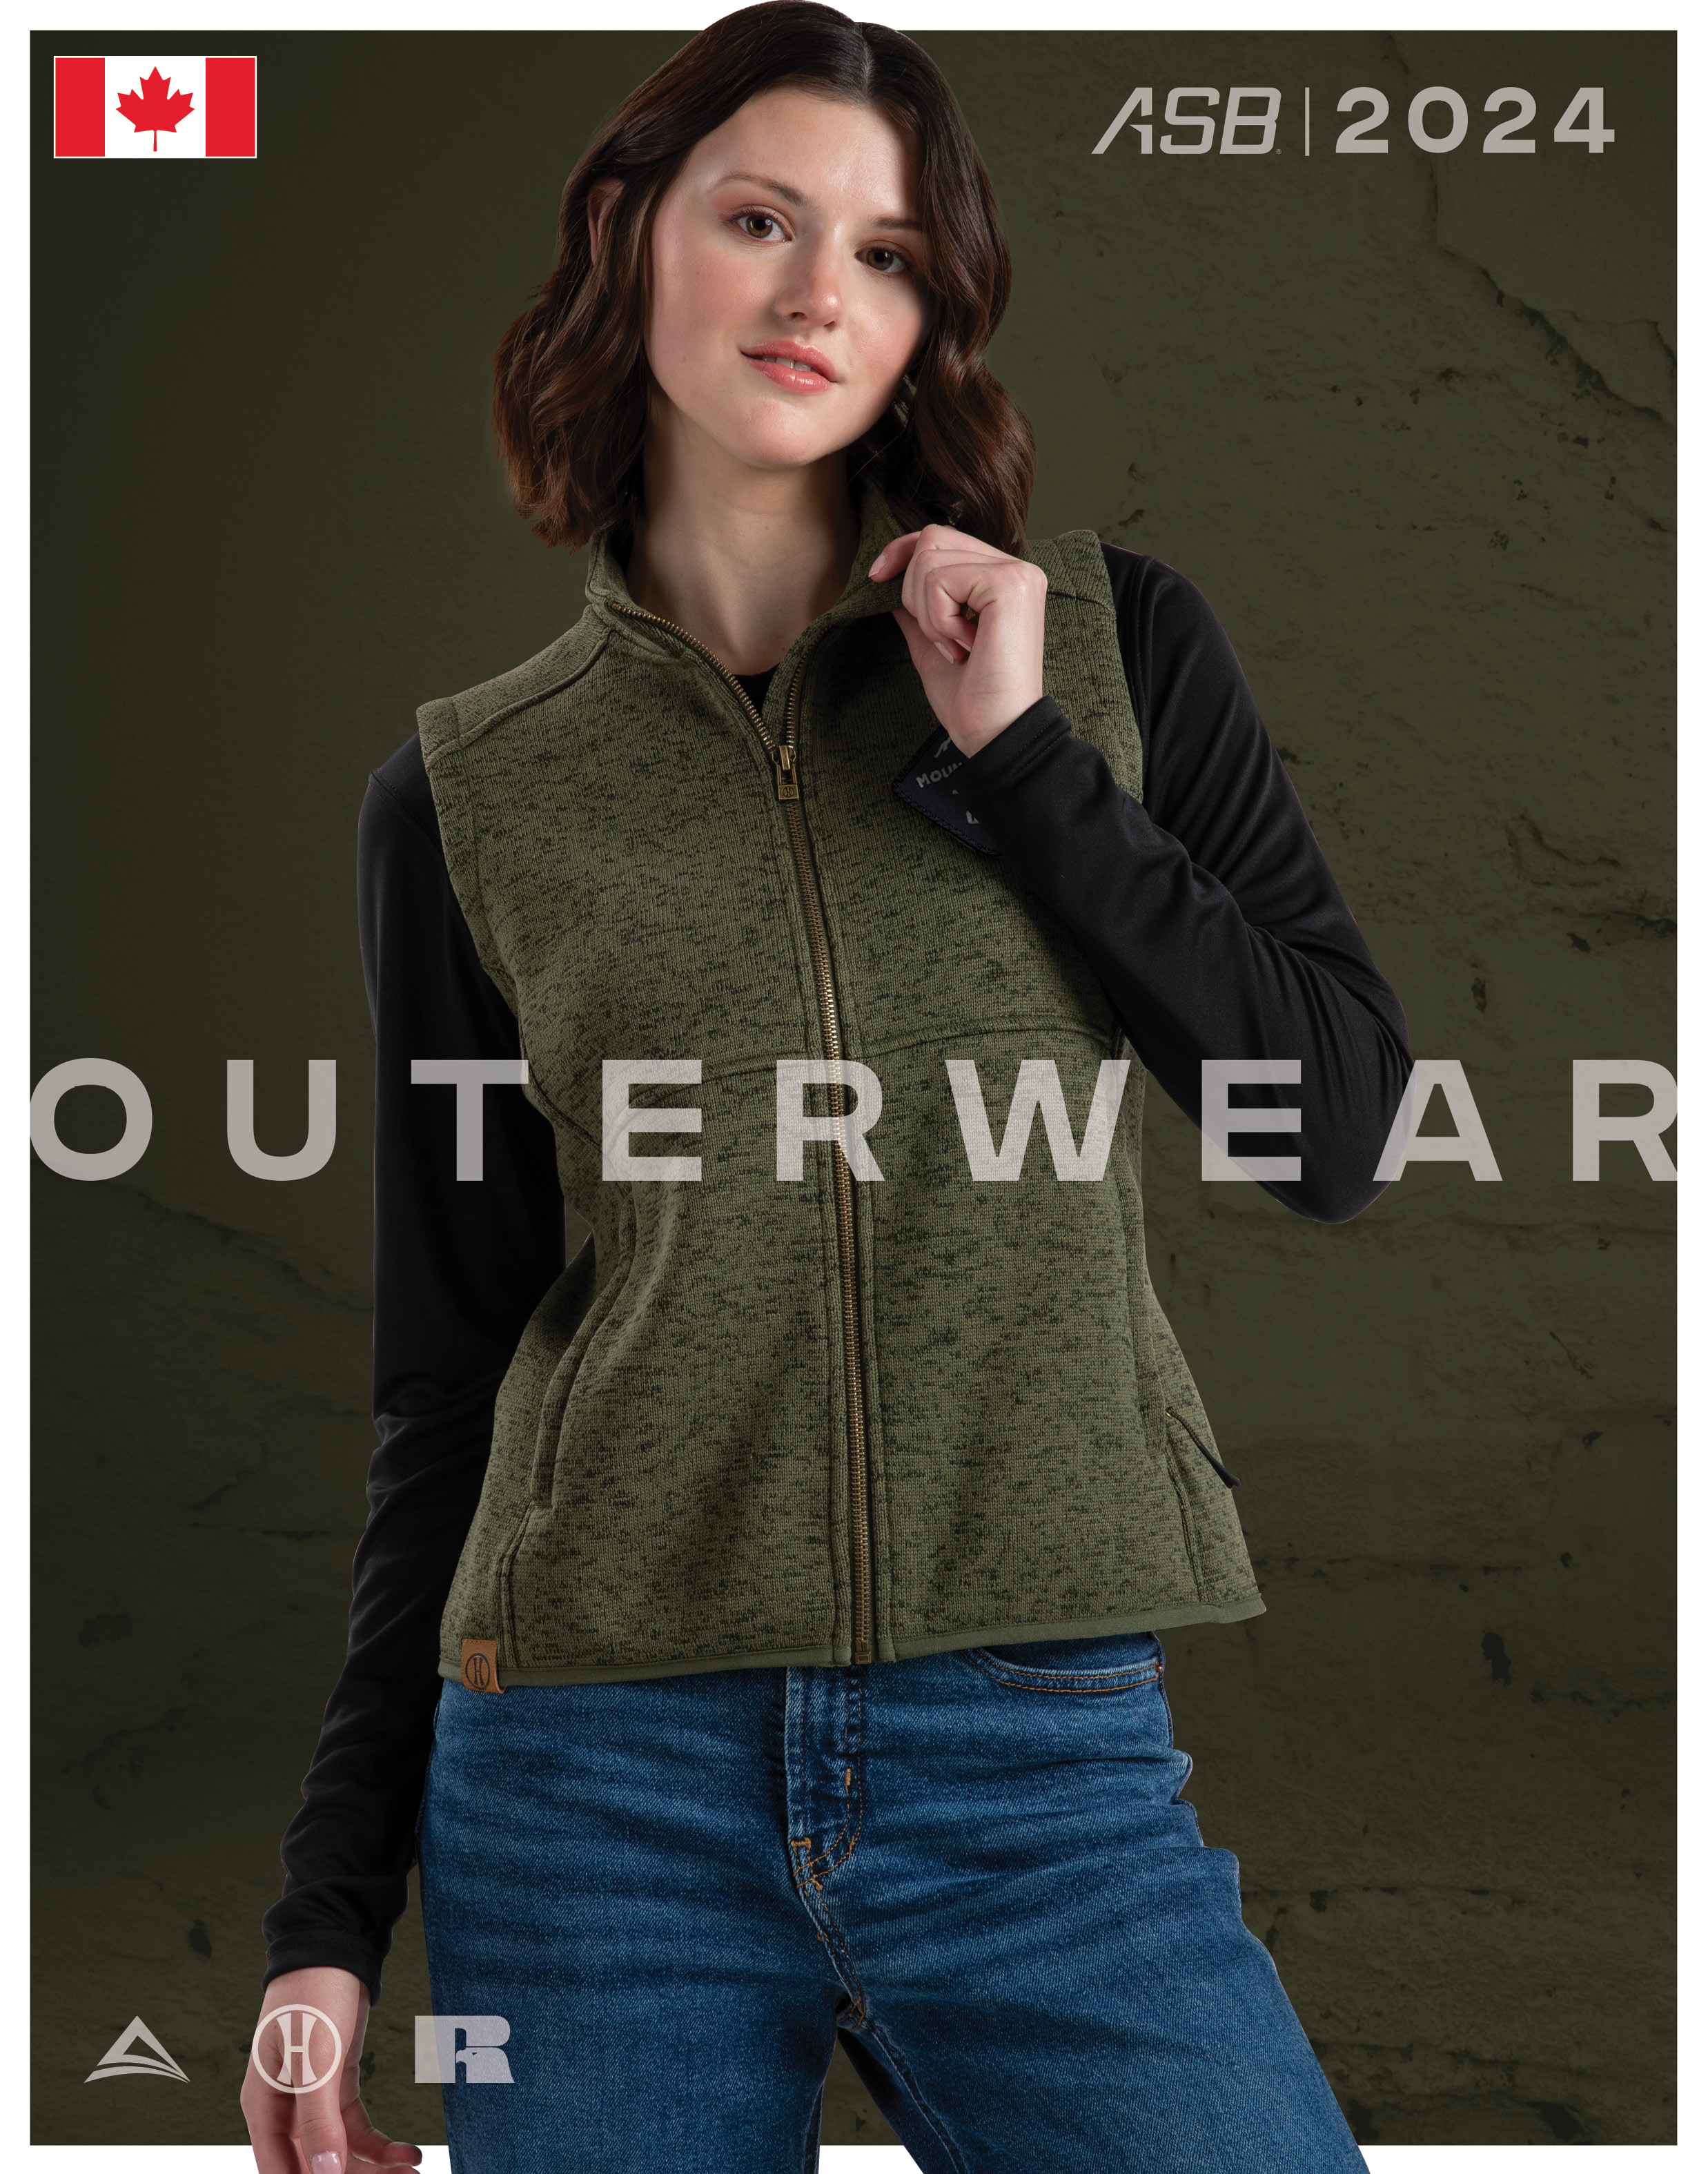 Outerwear Catalog 2024